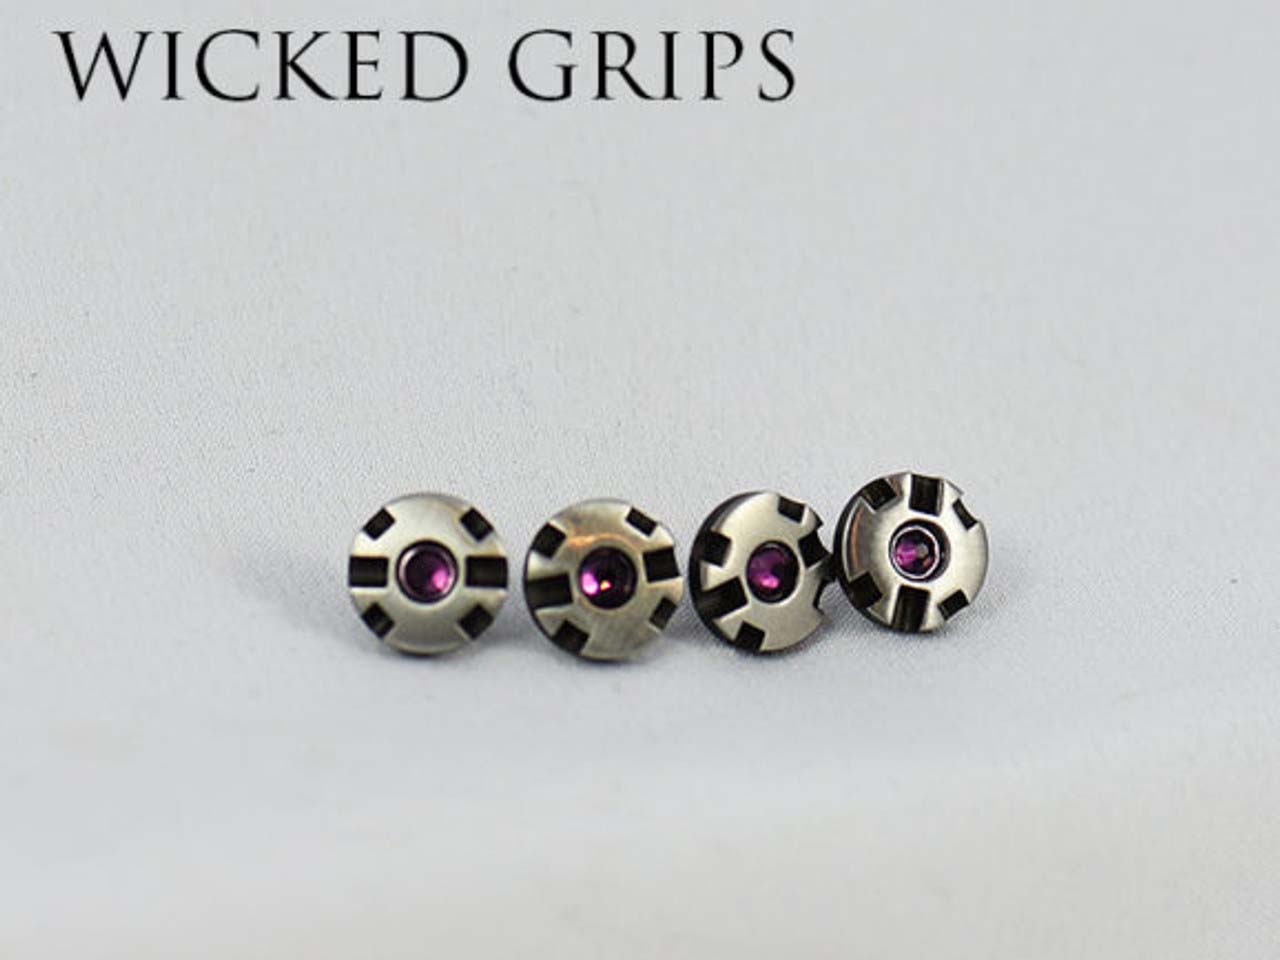 Four jewel-set custom grip screws